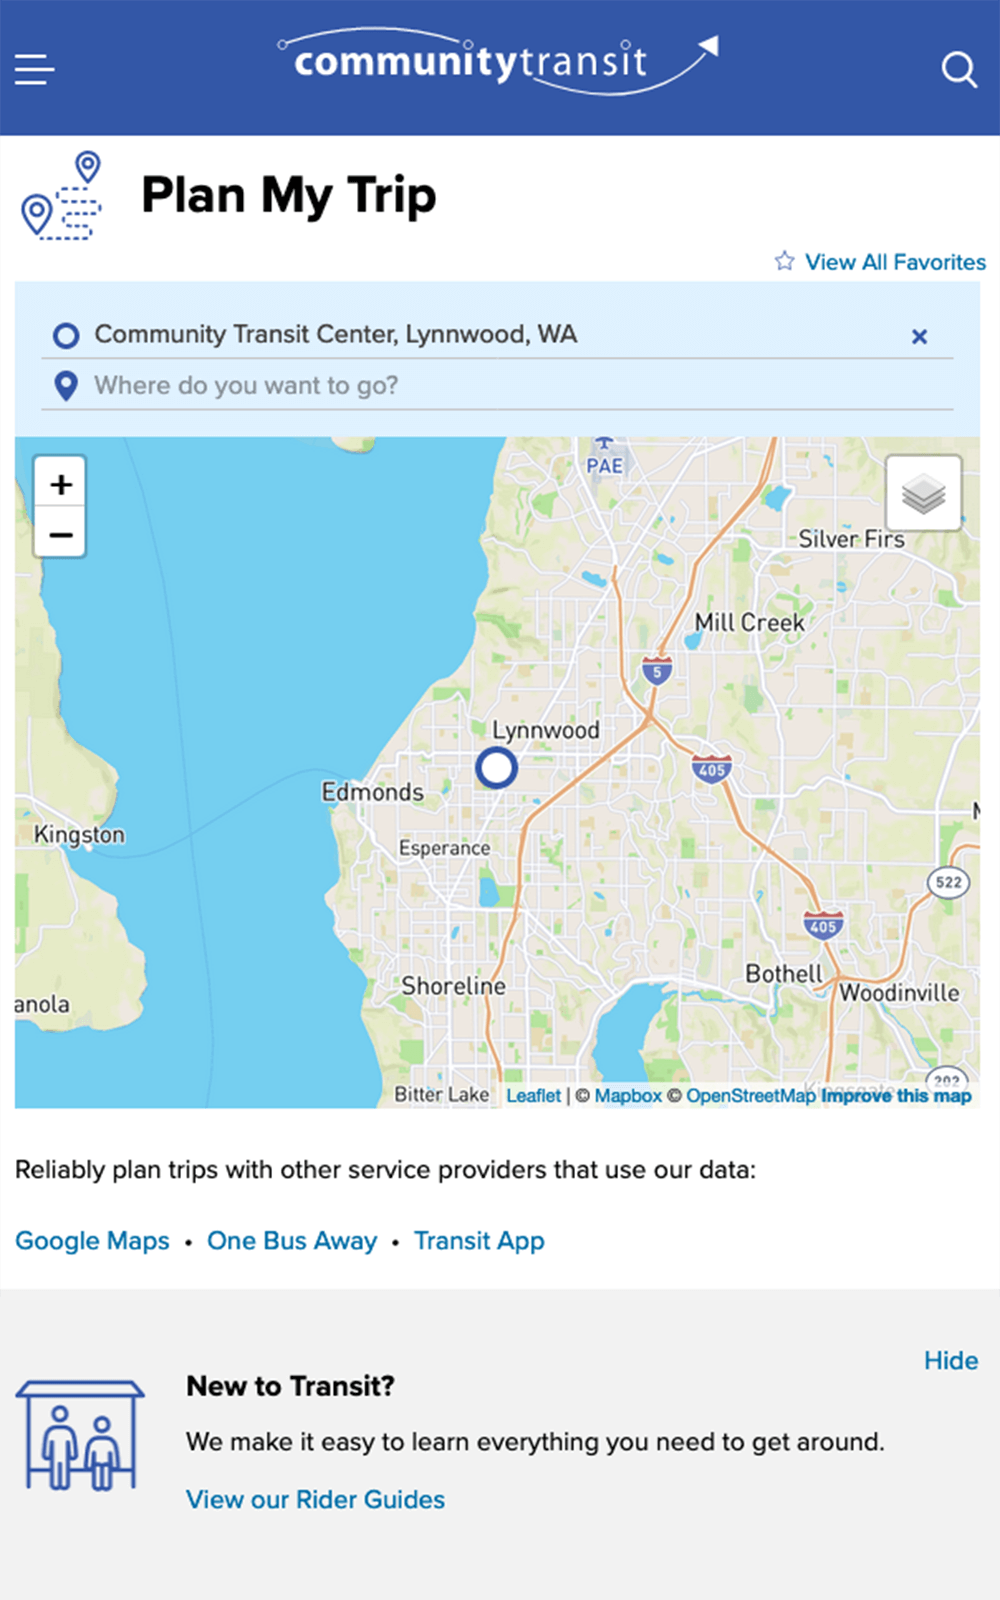 The new Community Transit Plan My Trip page